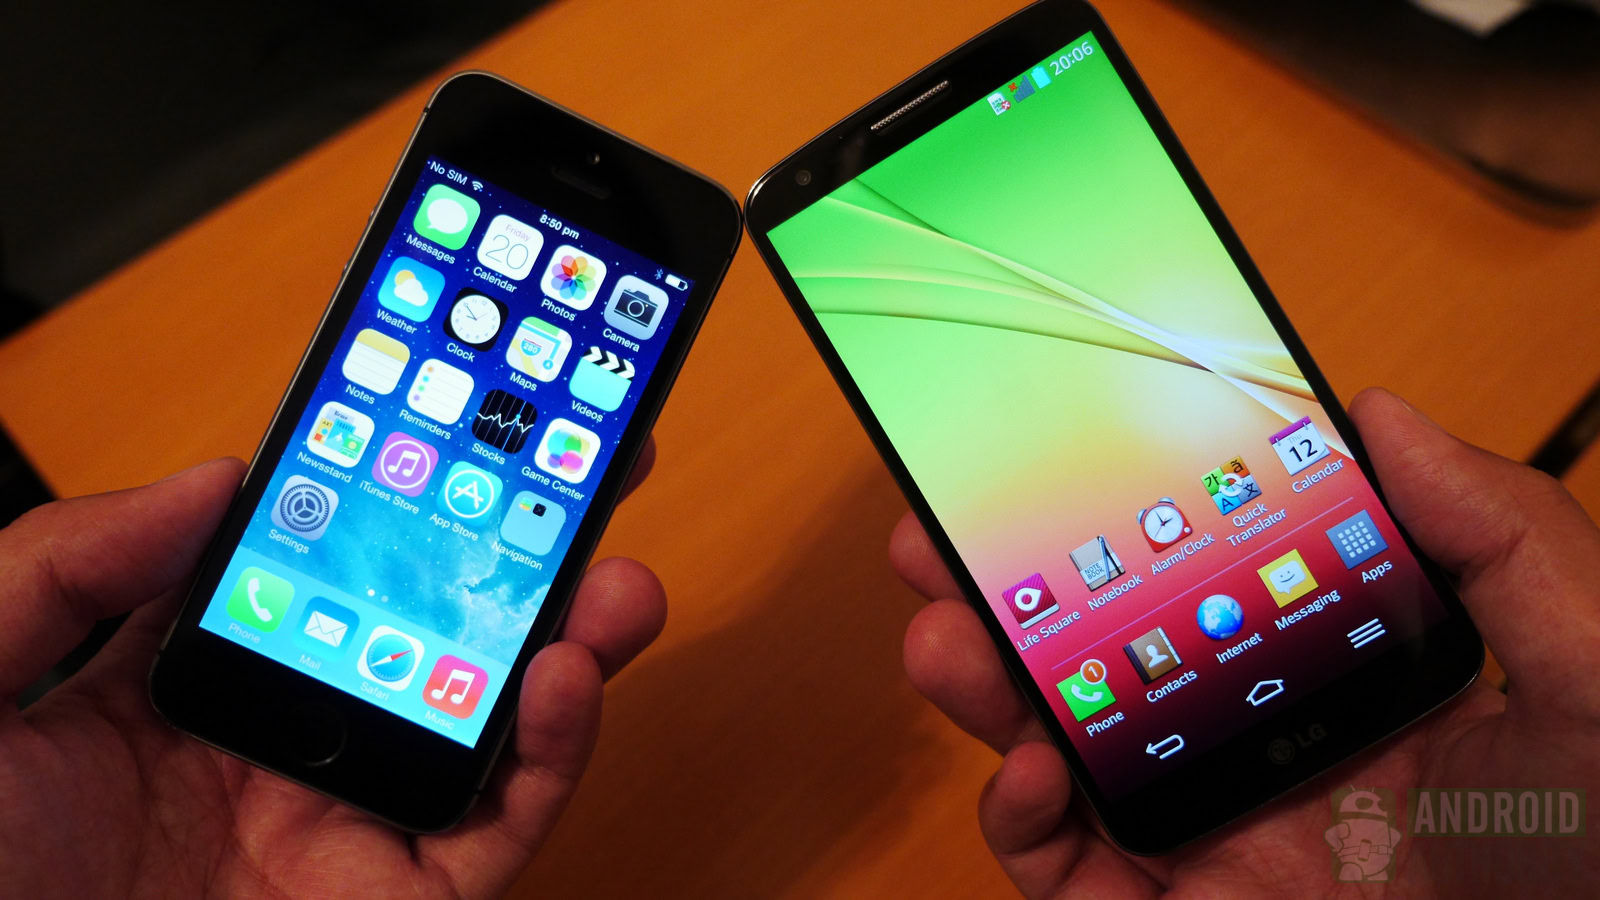 Apple iPhone 5s vs LG G2 aa 13